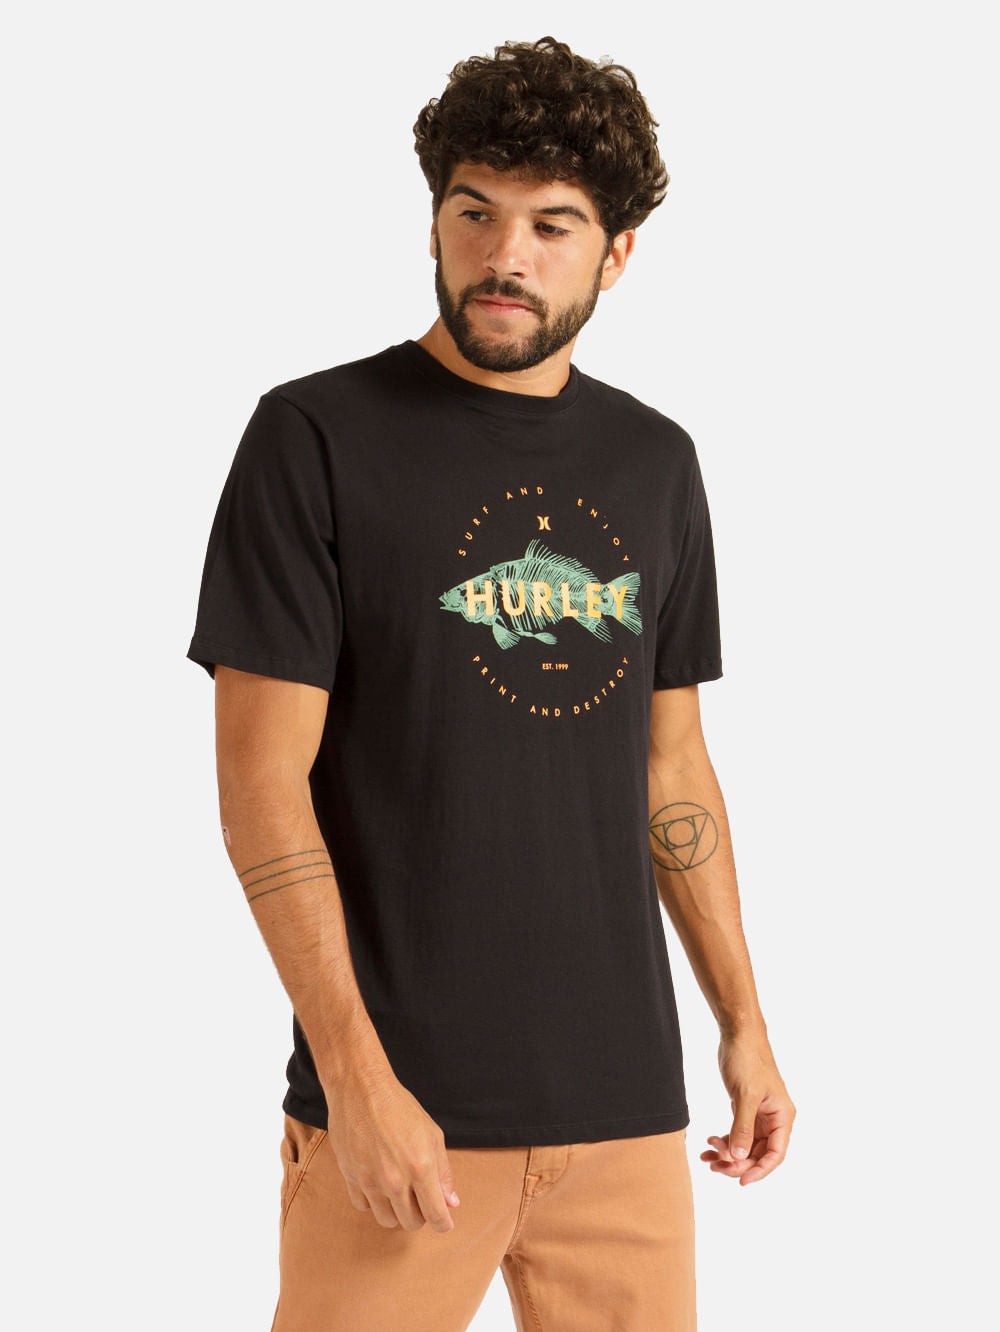 Camiseta Hurley Fish Preta